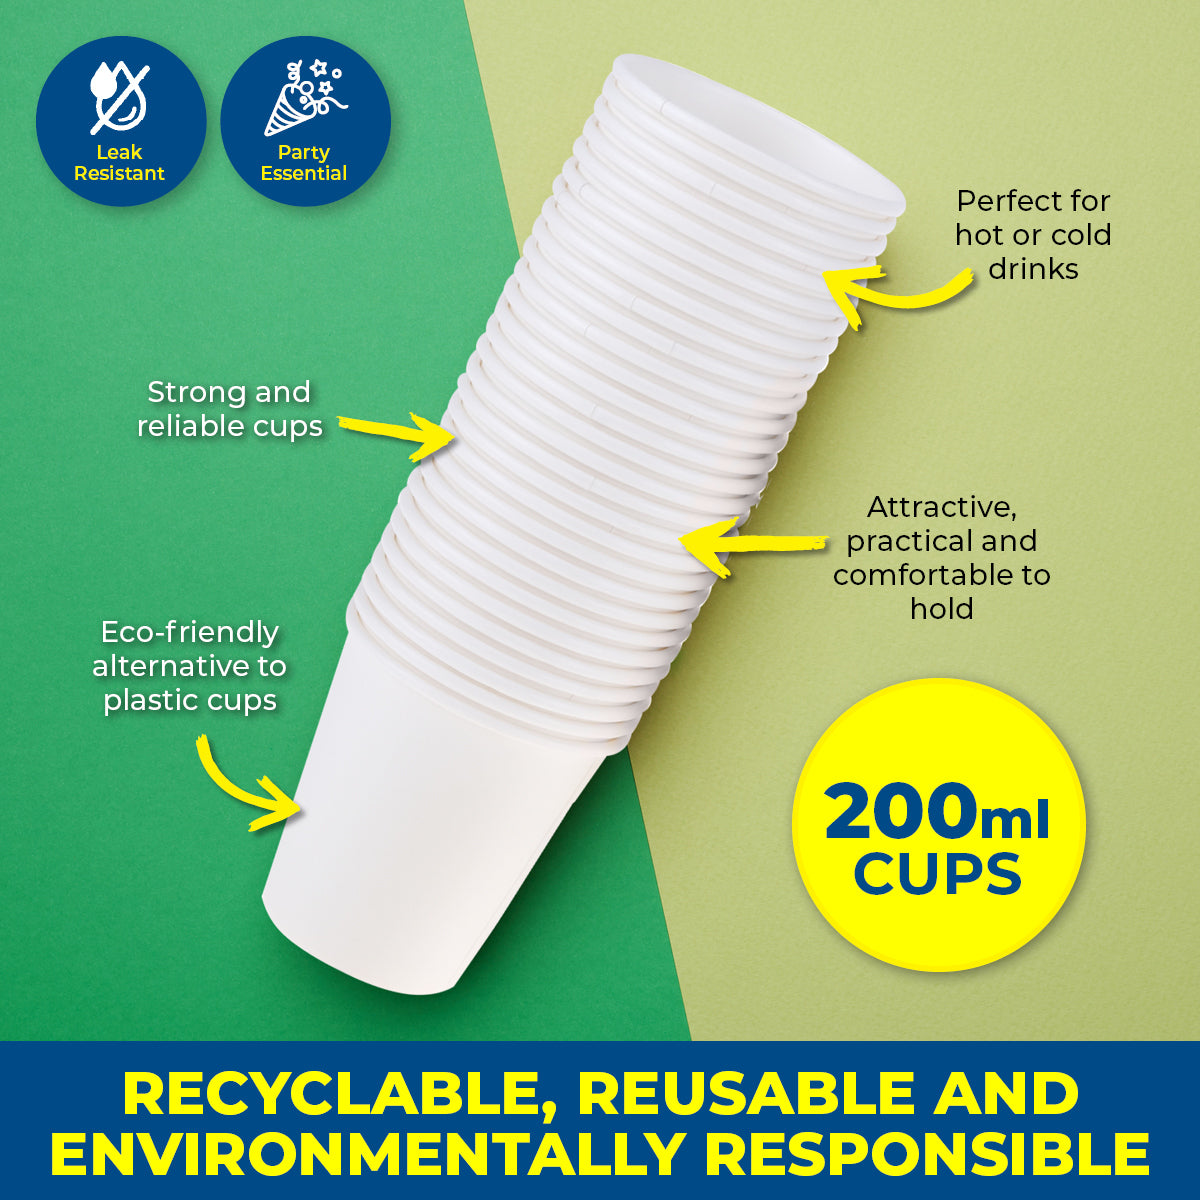 Party Central 900PCE White Paper Cups Disposable Leak Resistant 200ml